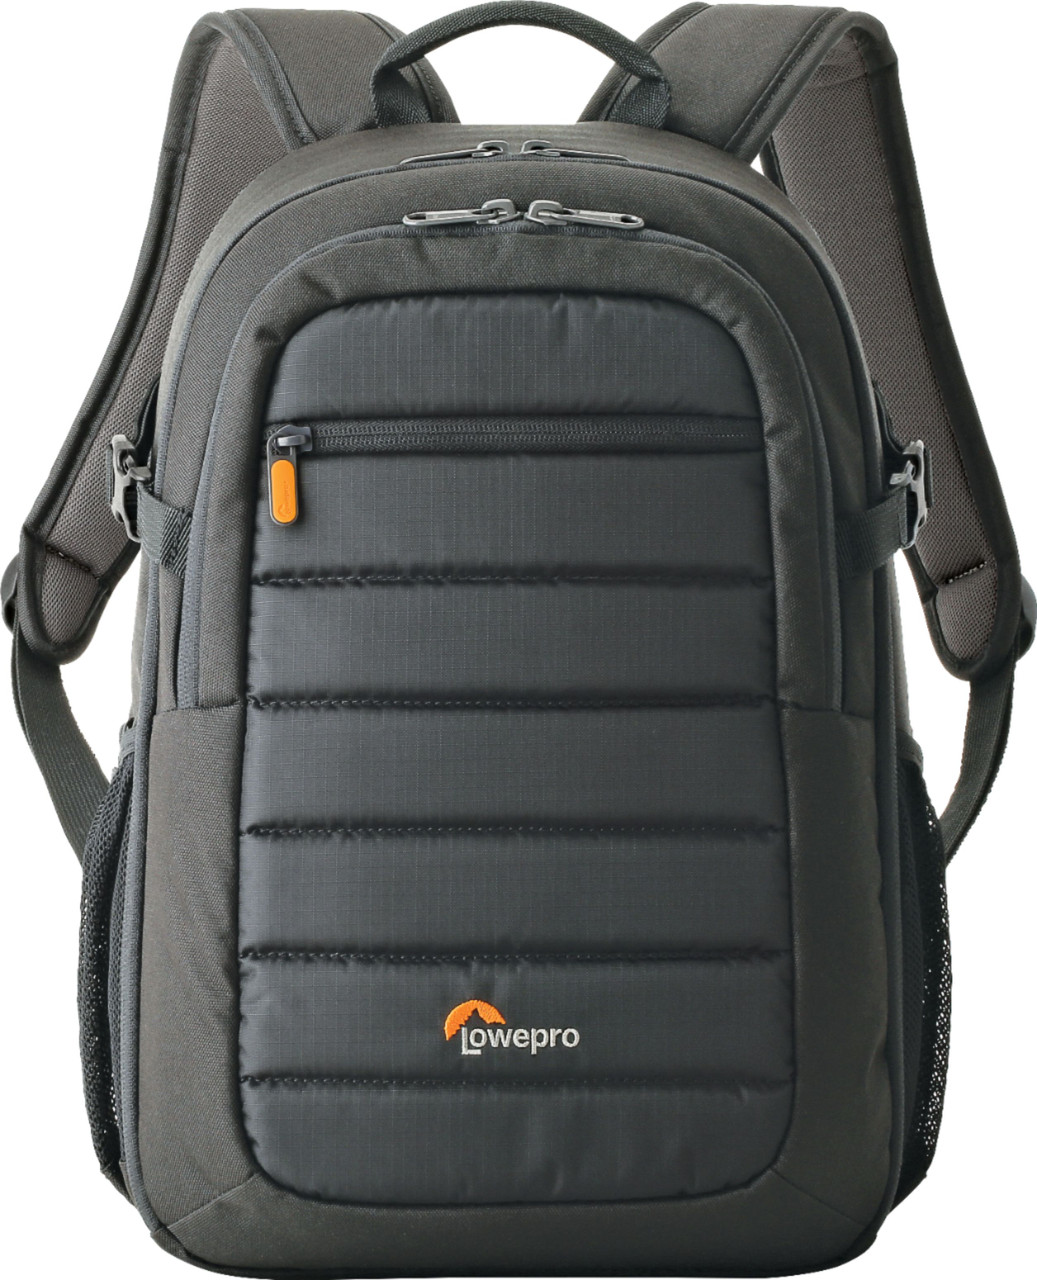 Lowepro - Tahoe Camera Backpack - Gray